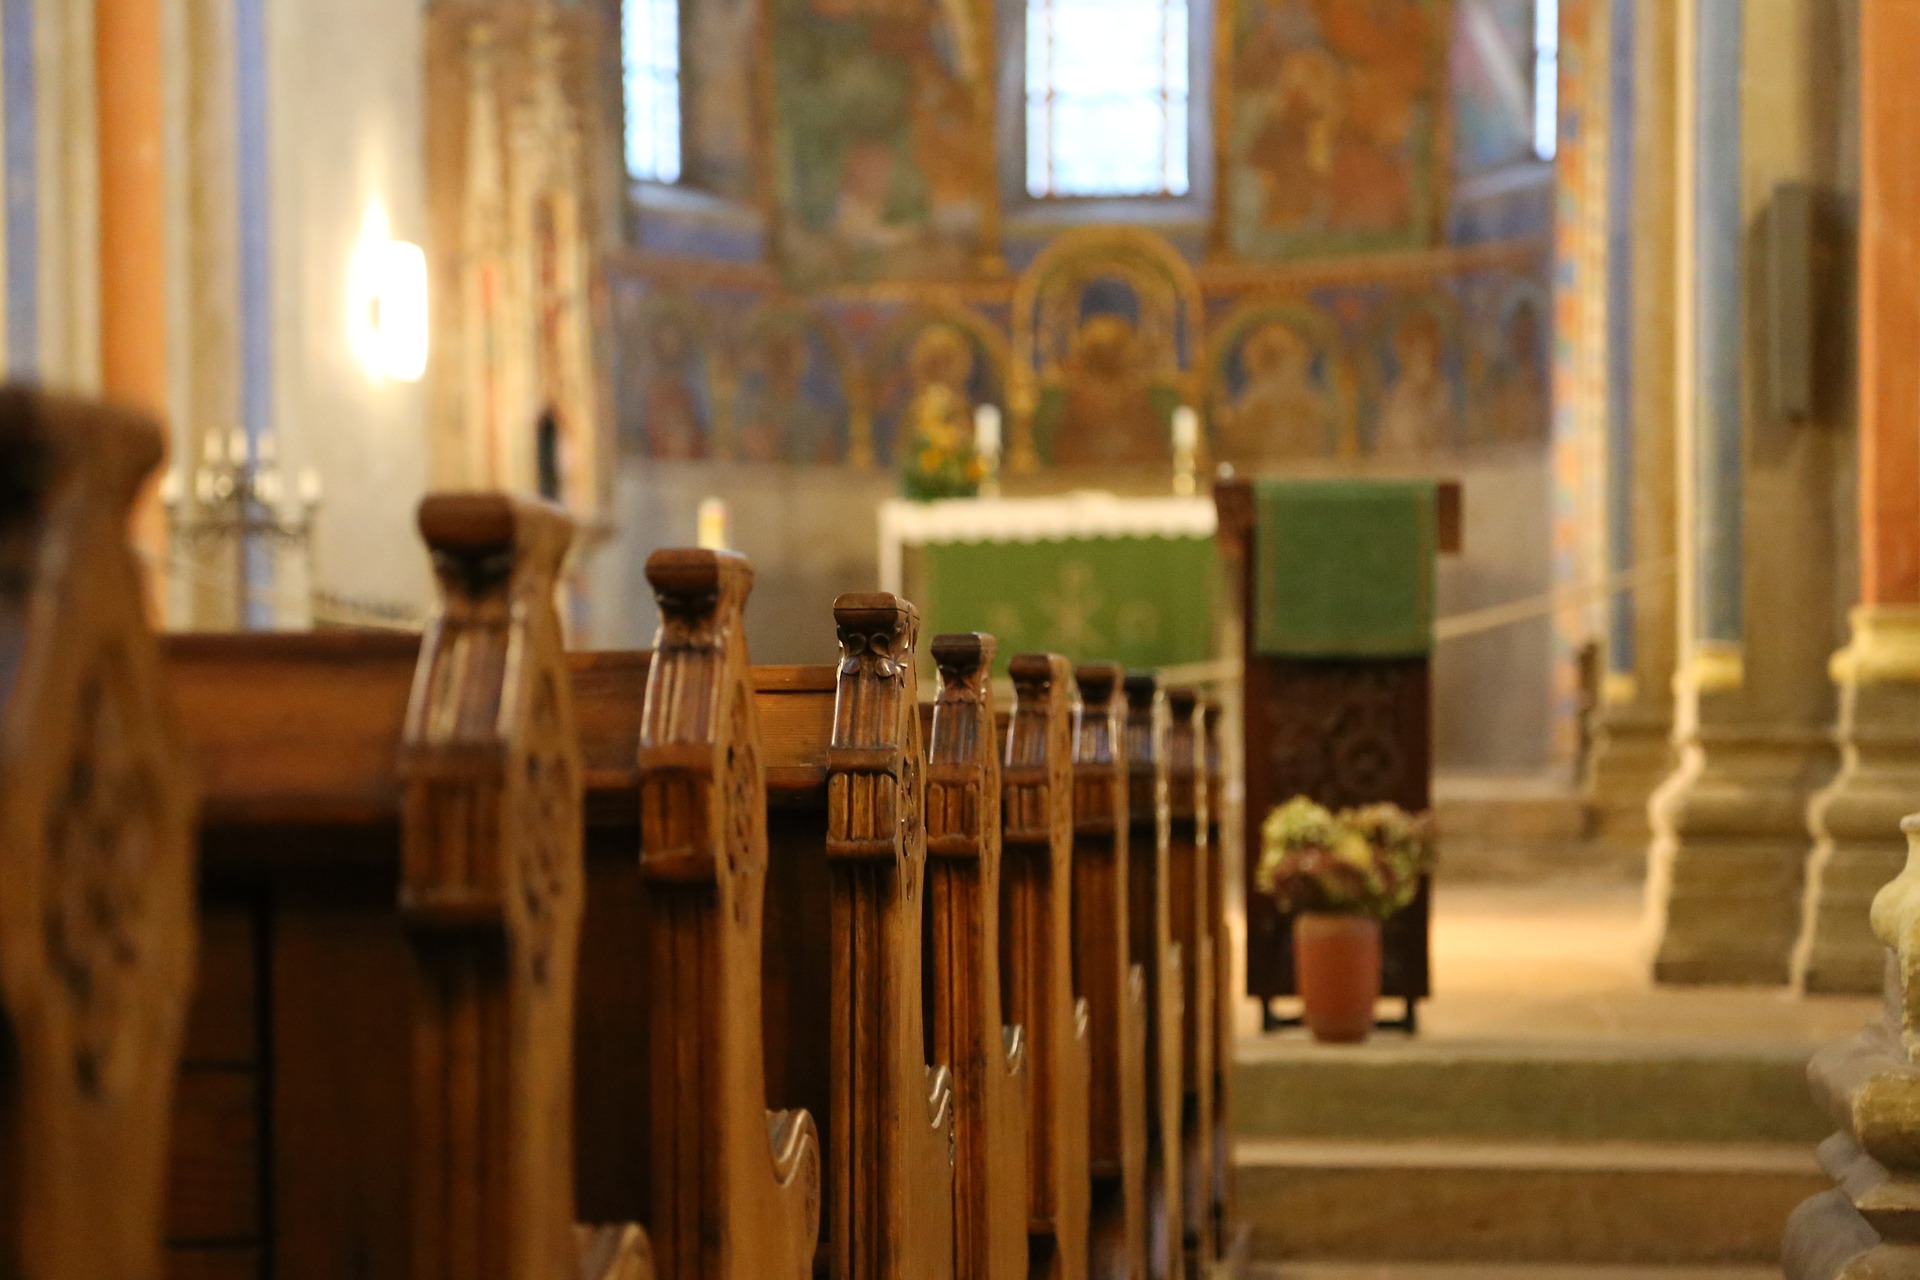 church pews in a sanctuary